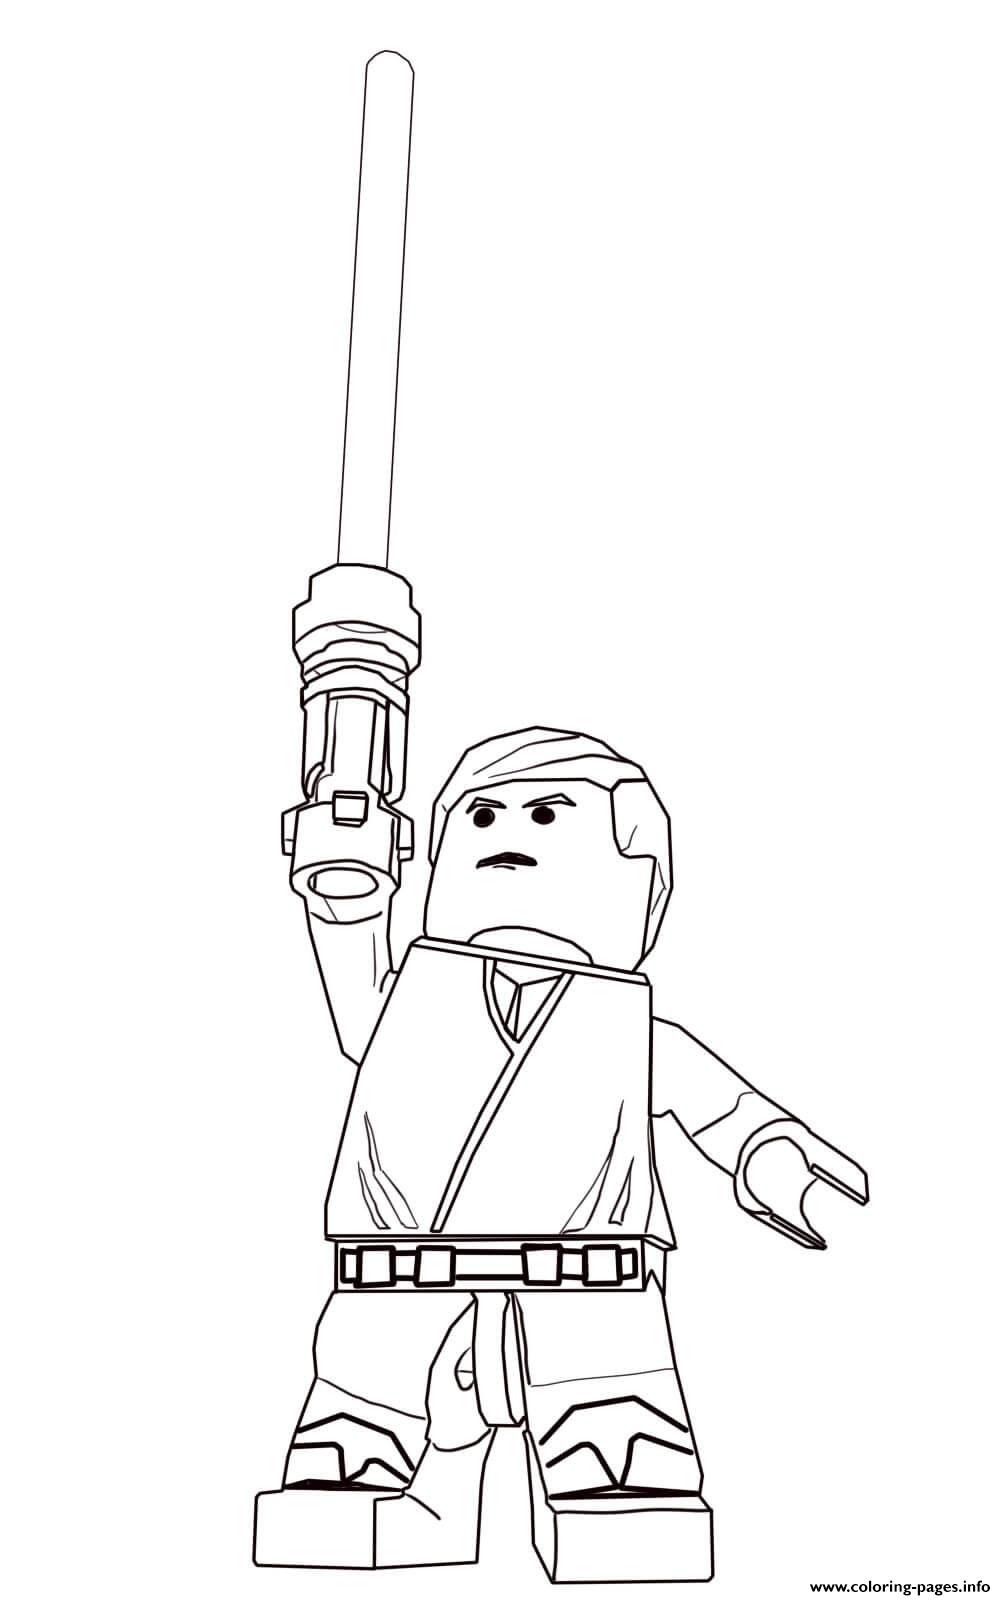 Lego Star Wars Luke Skywalker coloring